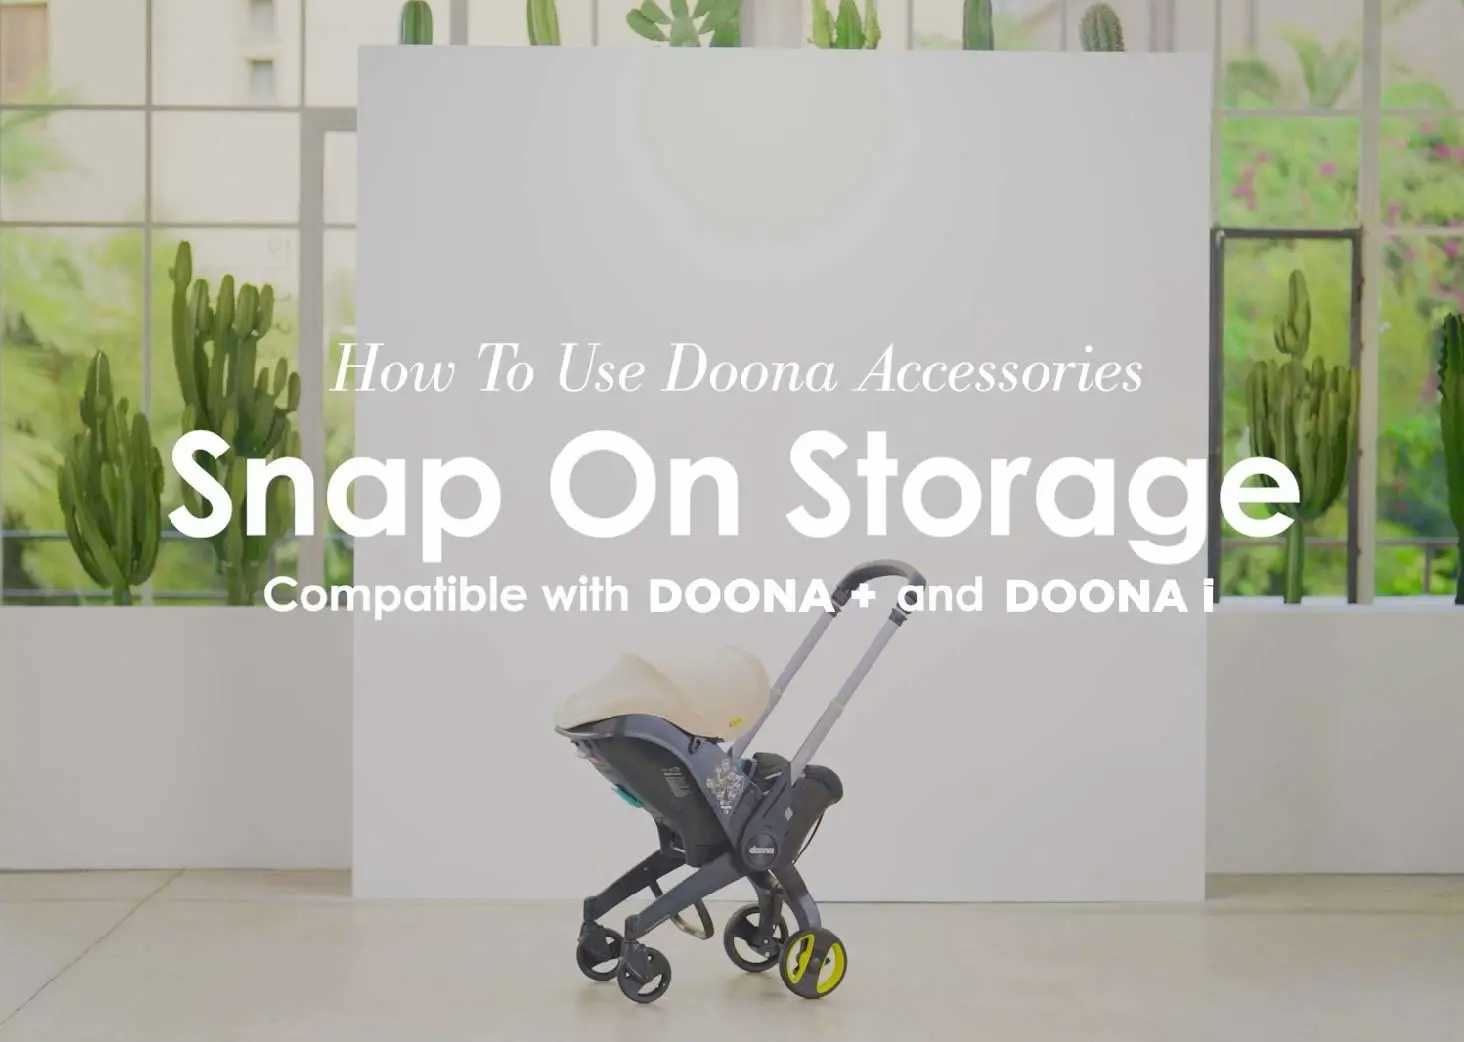 Doona i - Snap on storage